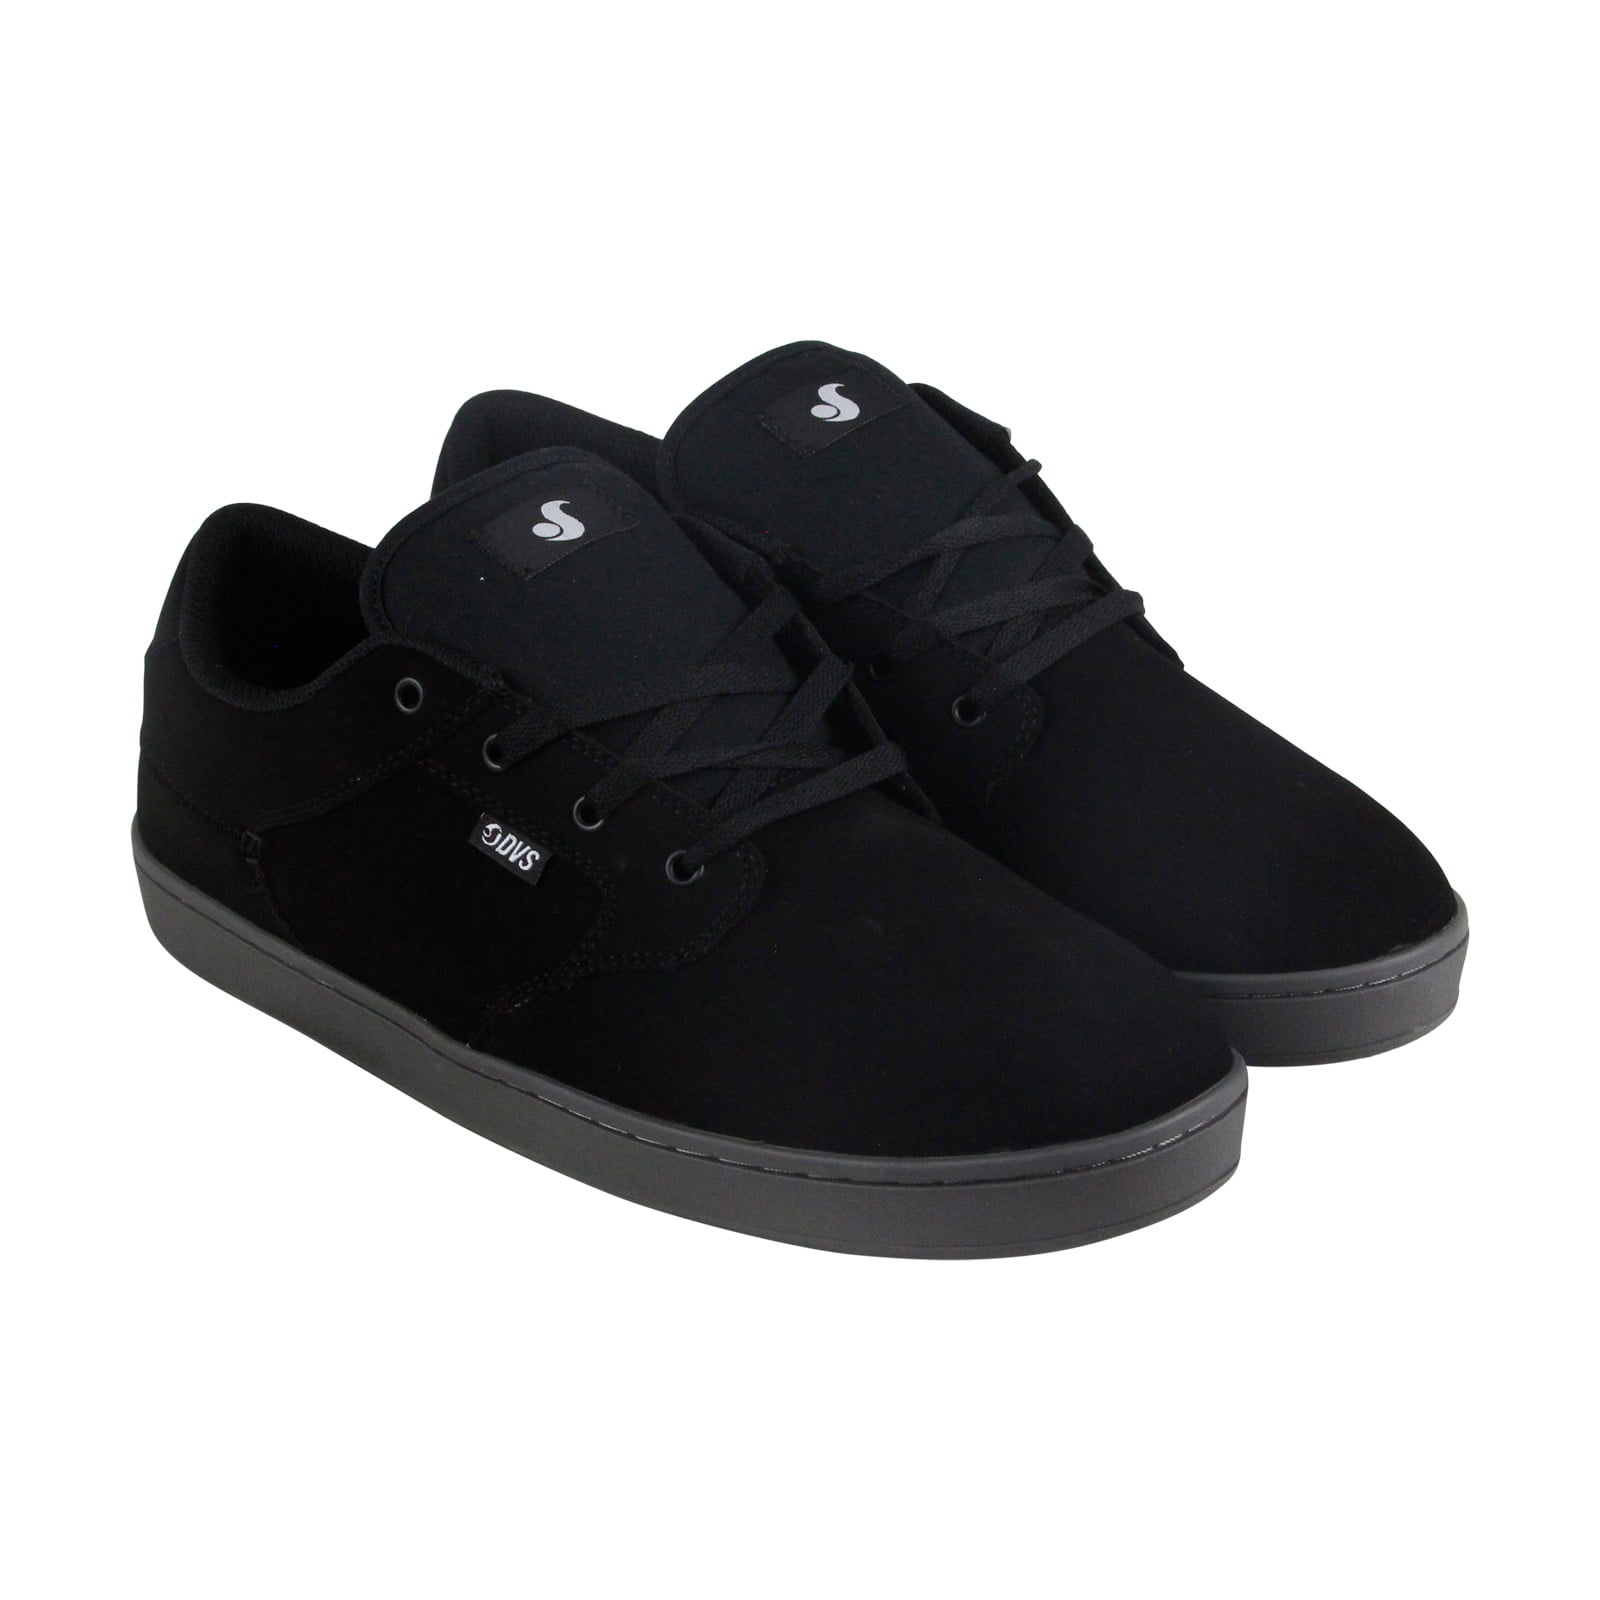 Dvs - DVS Quentin Mens Black Nubuck Lace Up Skate Shoes - Walmart.com ...